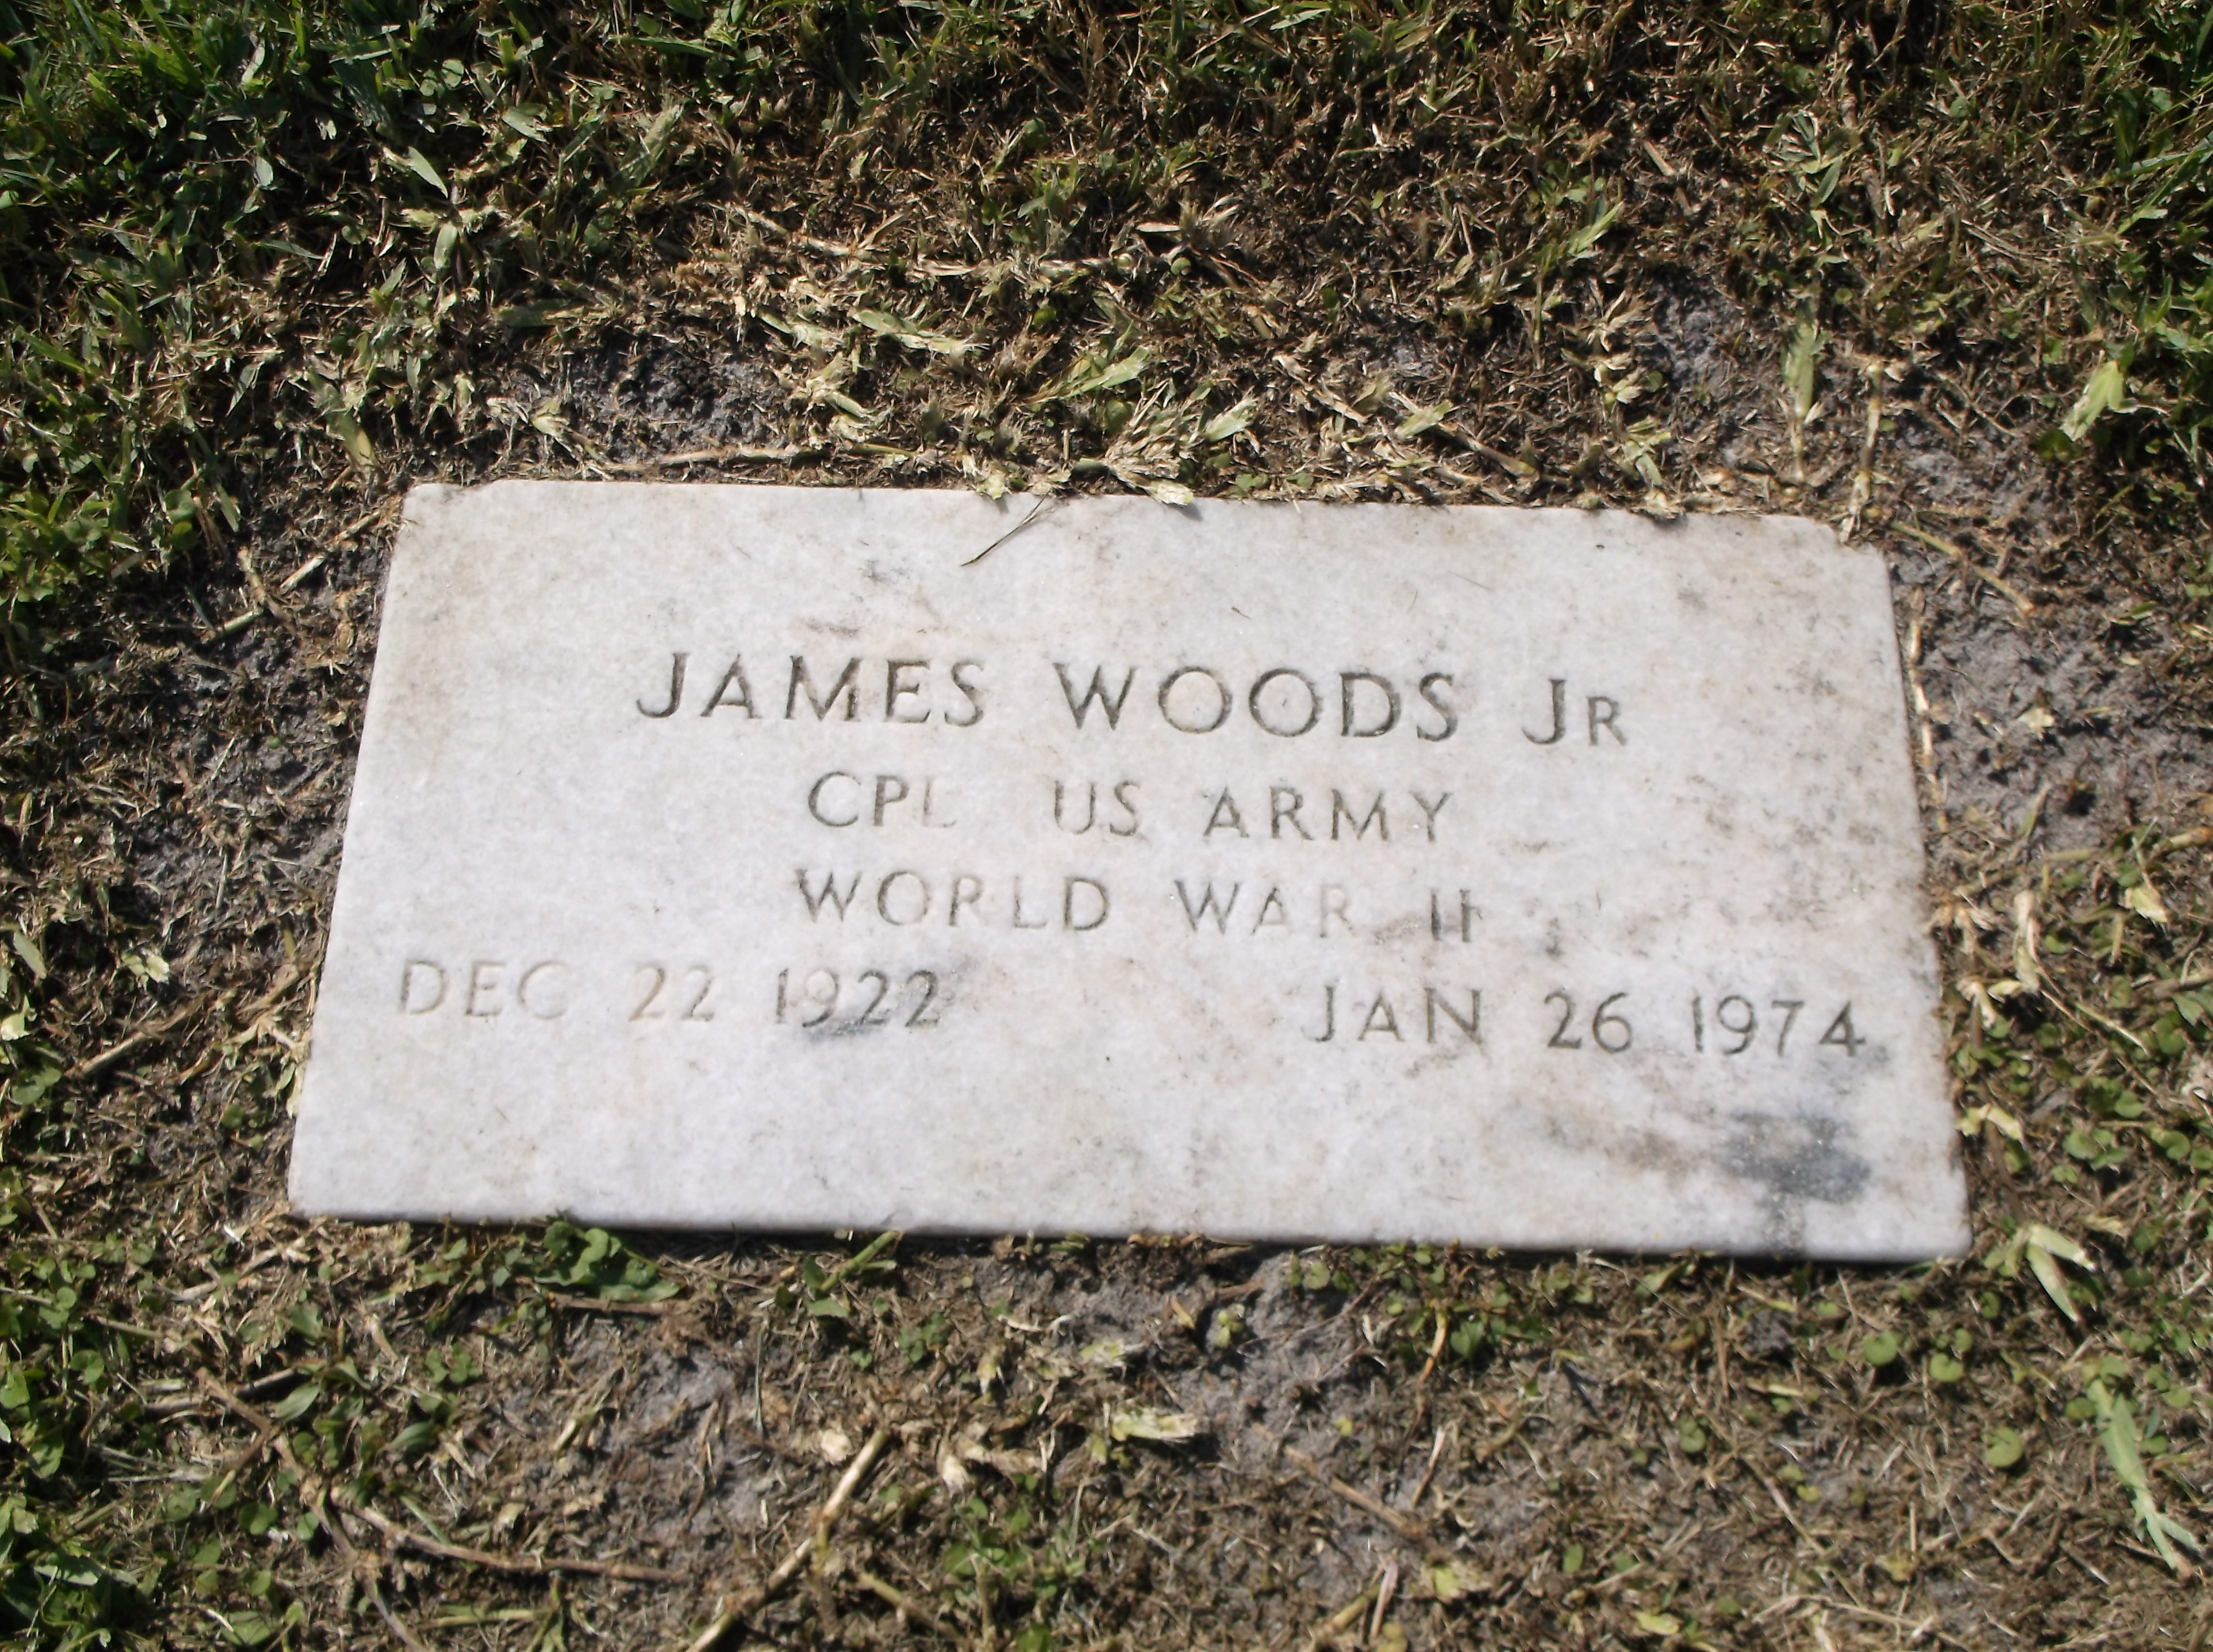 James Woods, Jr